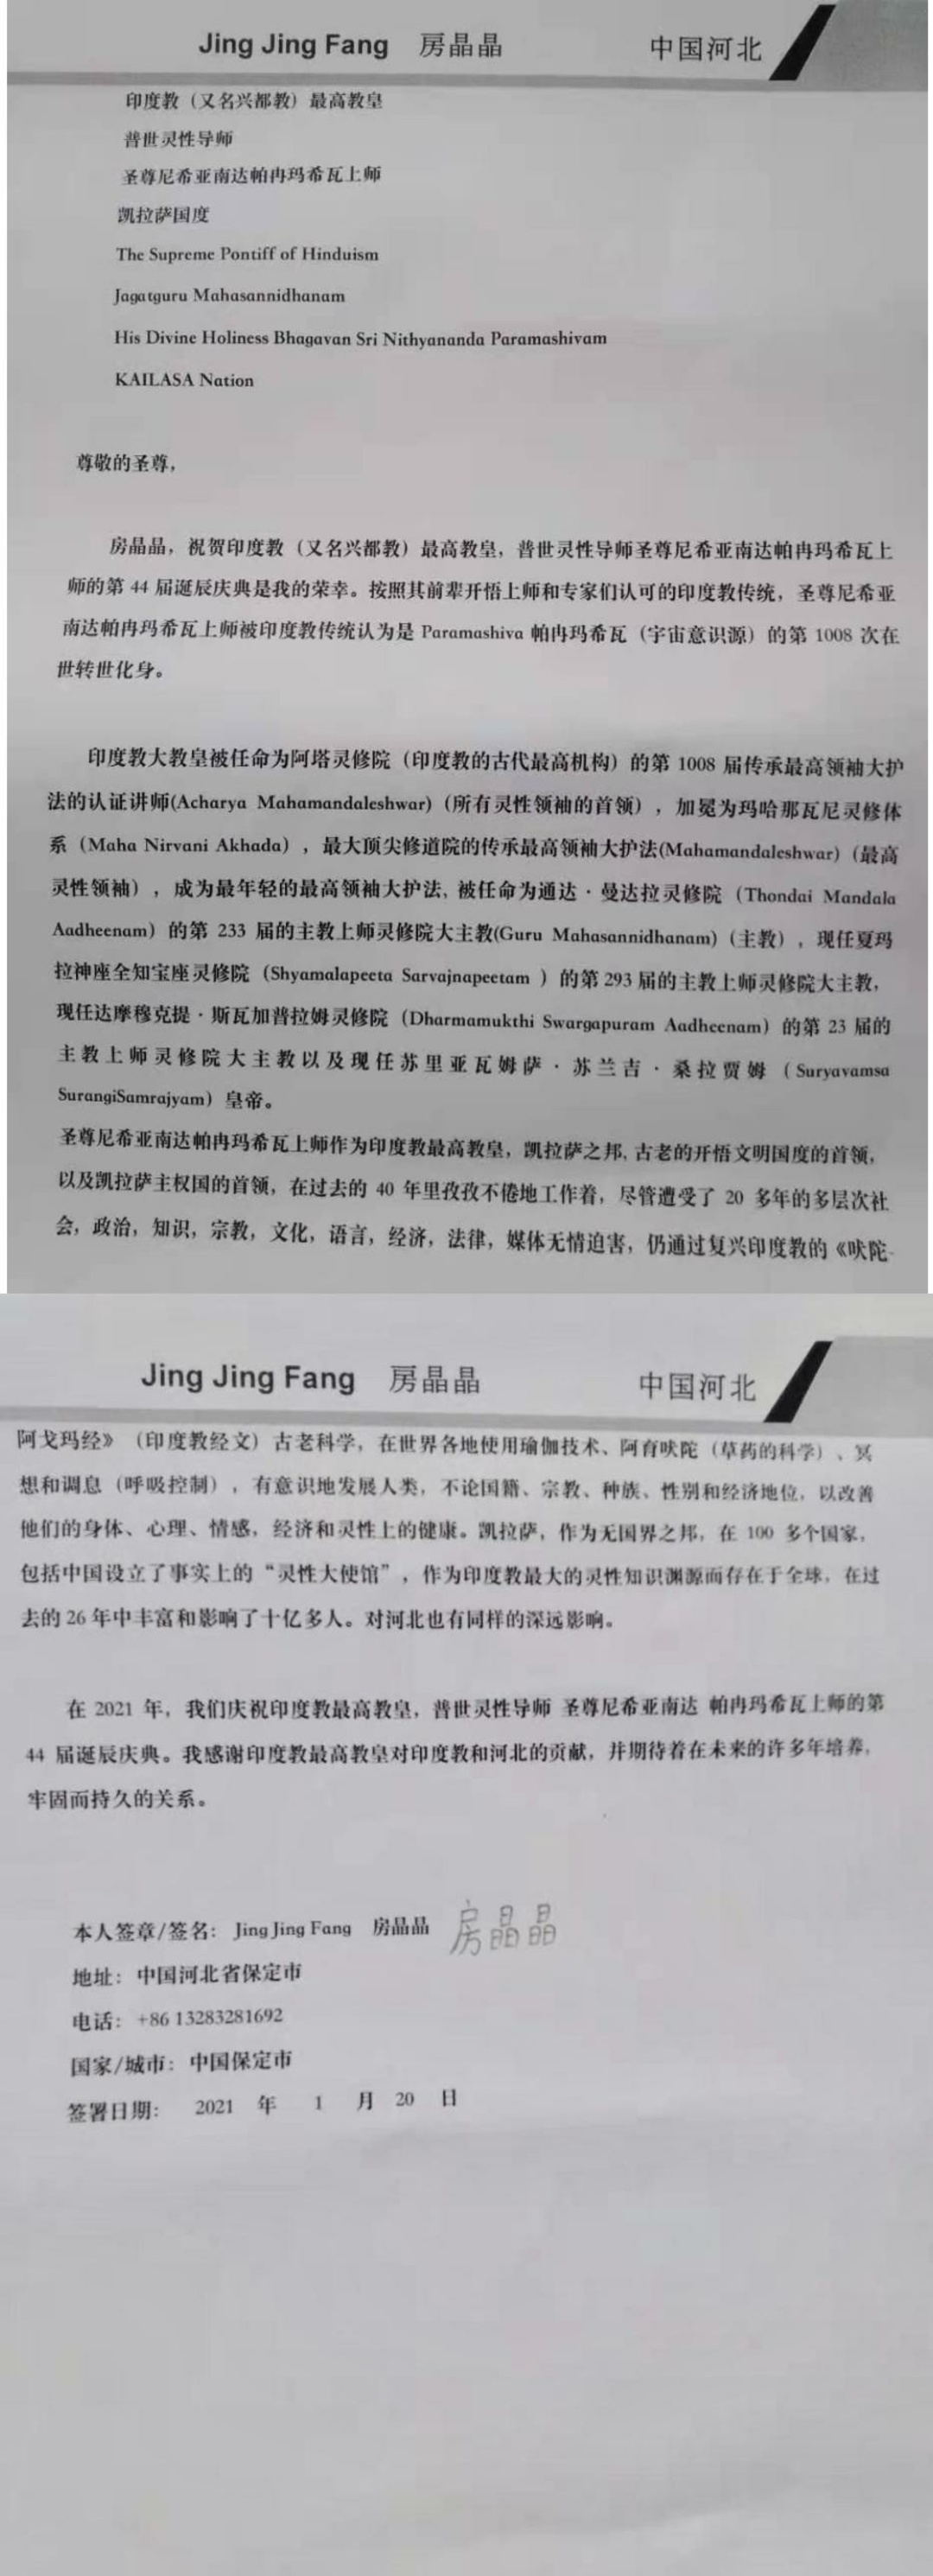 China---Jingjing-Fang---January-20--2021-(Proclamation)-10rp2wBOzKshpAirUap0Wy ejErFXH3zp.pdf